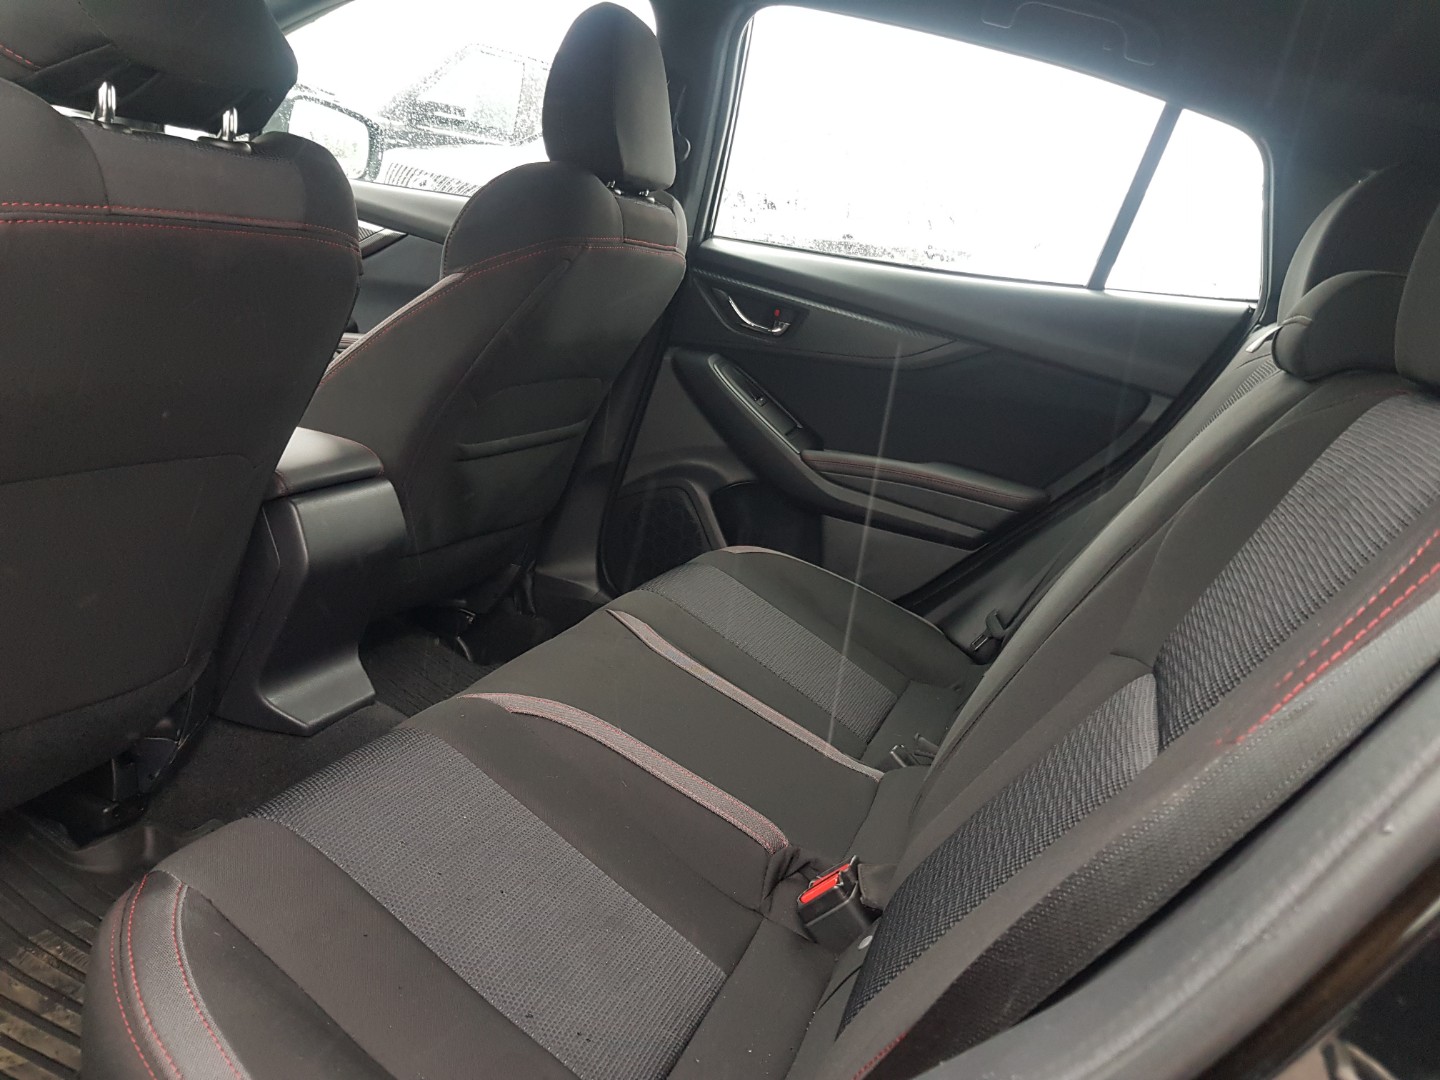 Subaru Impreza, 2019 г.в., пробег 28 533 км, цена, фото, Мурманск